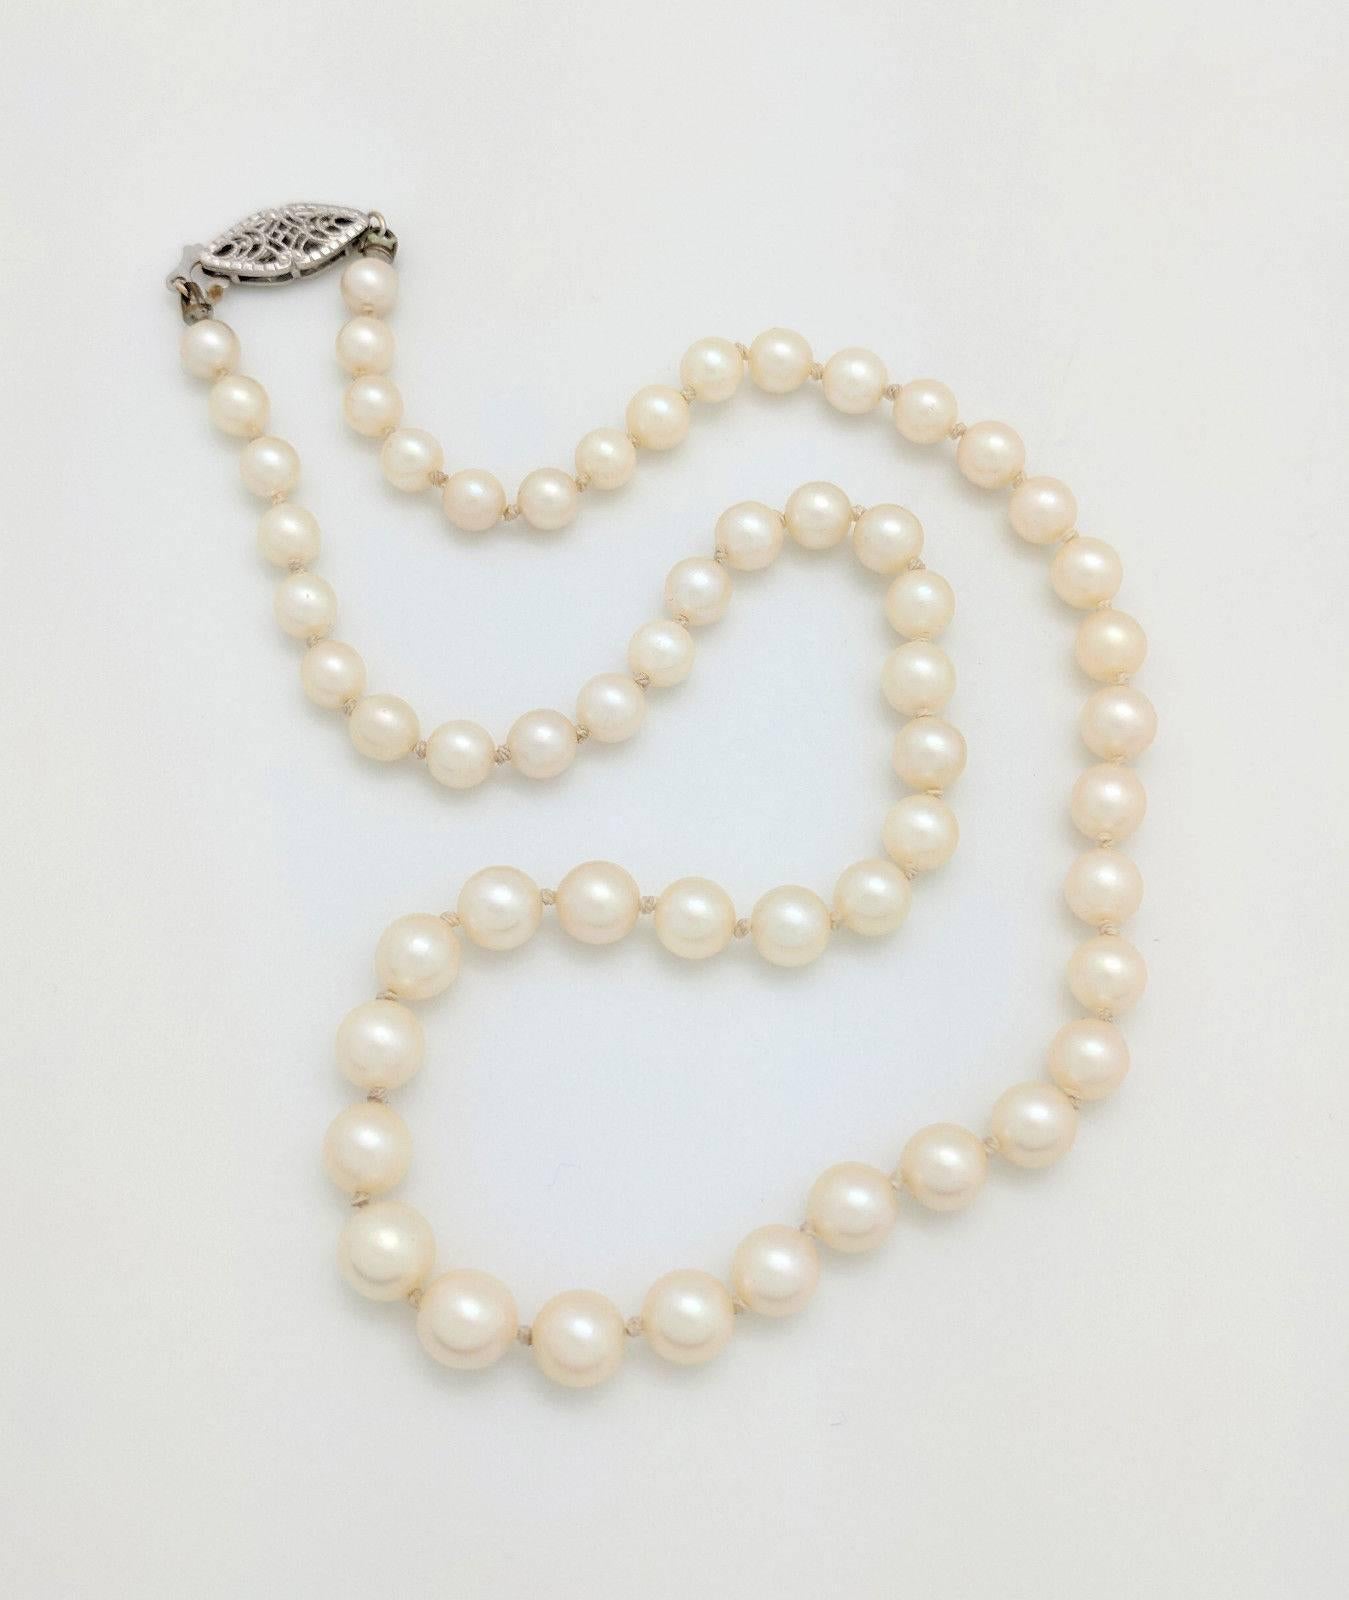 Women's 14 Karat White Gold Graduating Cultured Pearl Necklace